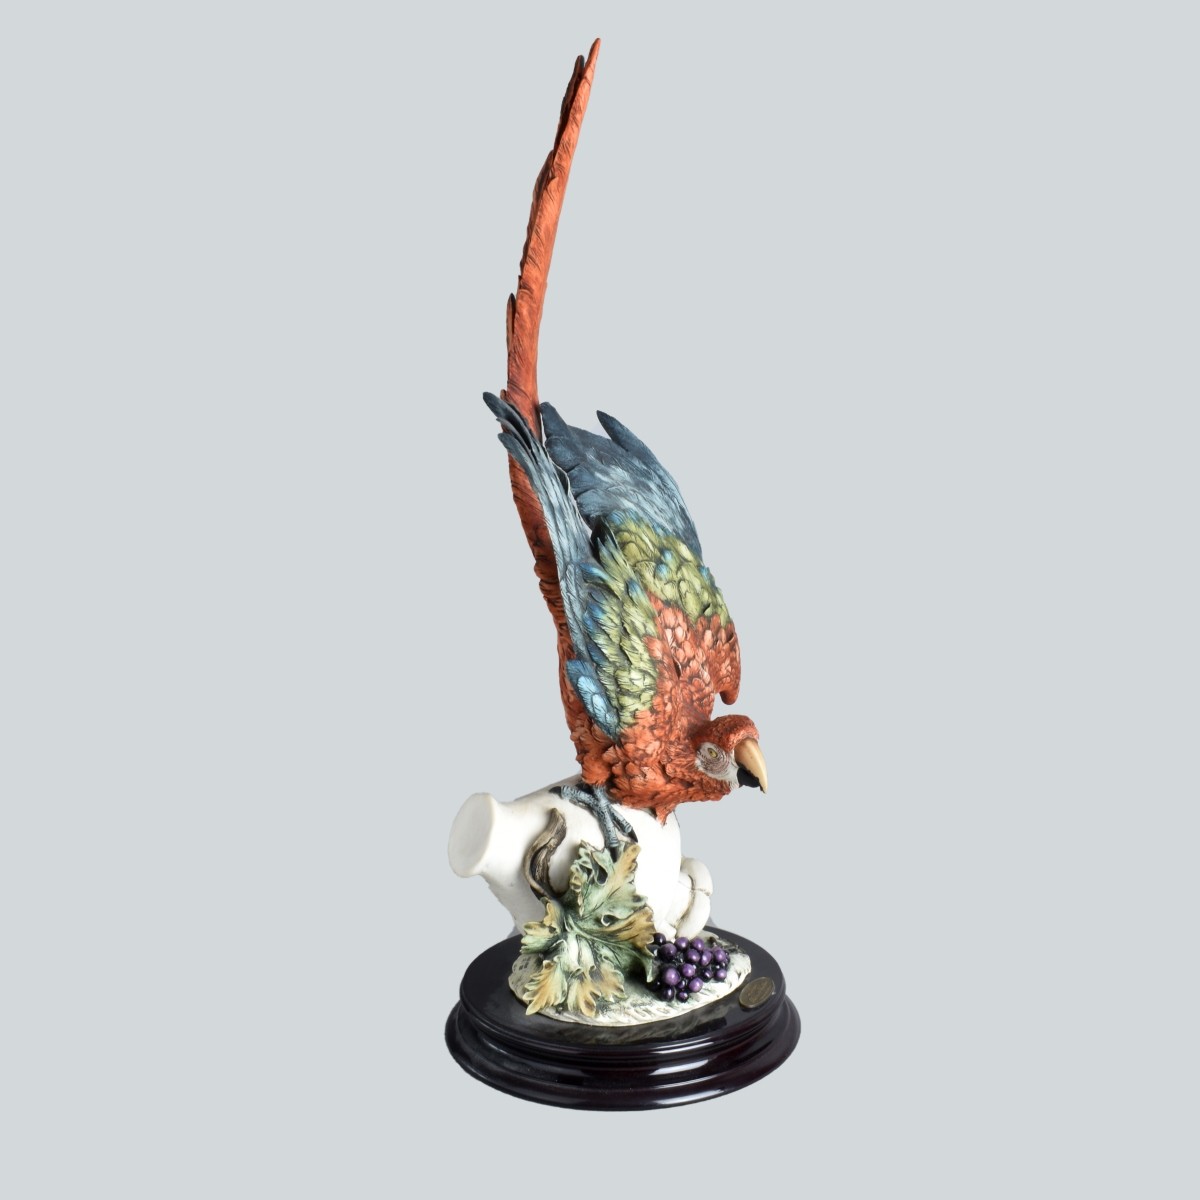 Guiseppe Armani "Flaming Feathers" Figurine